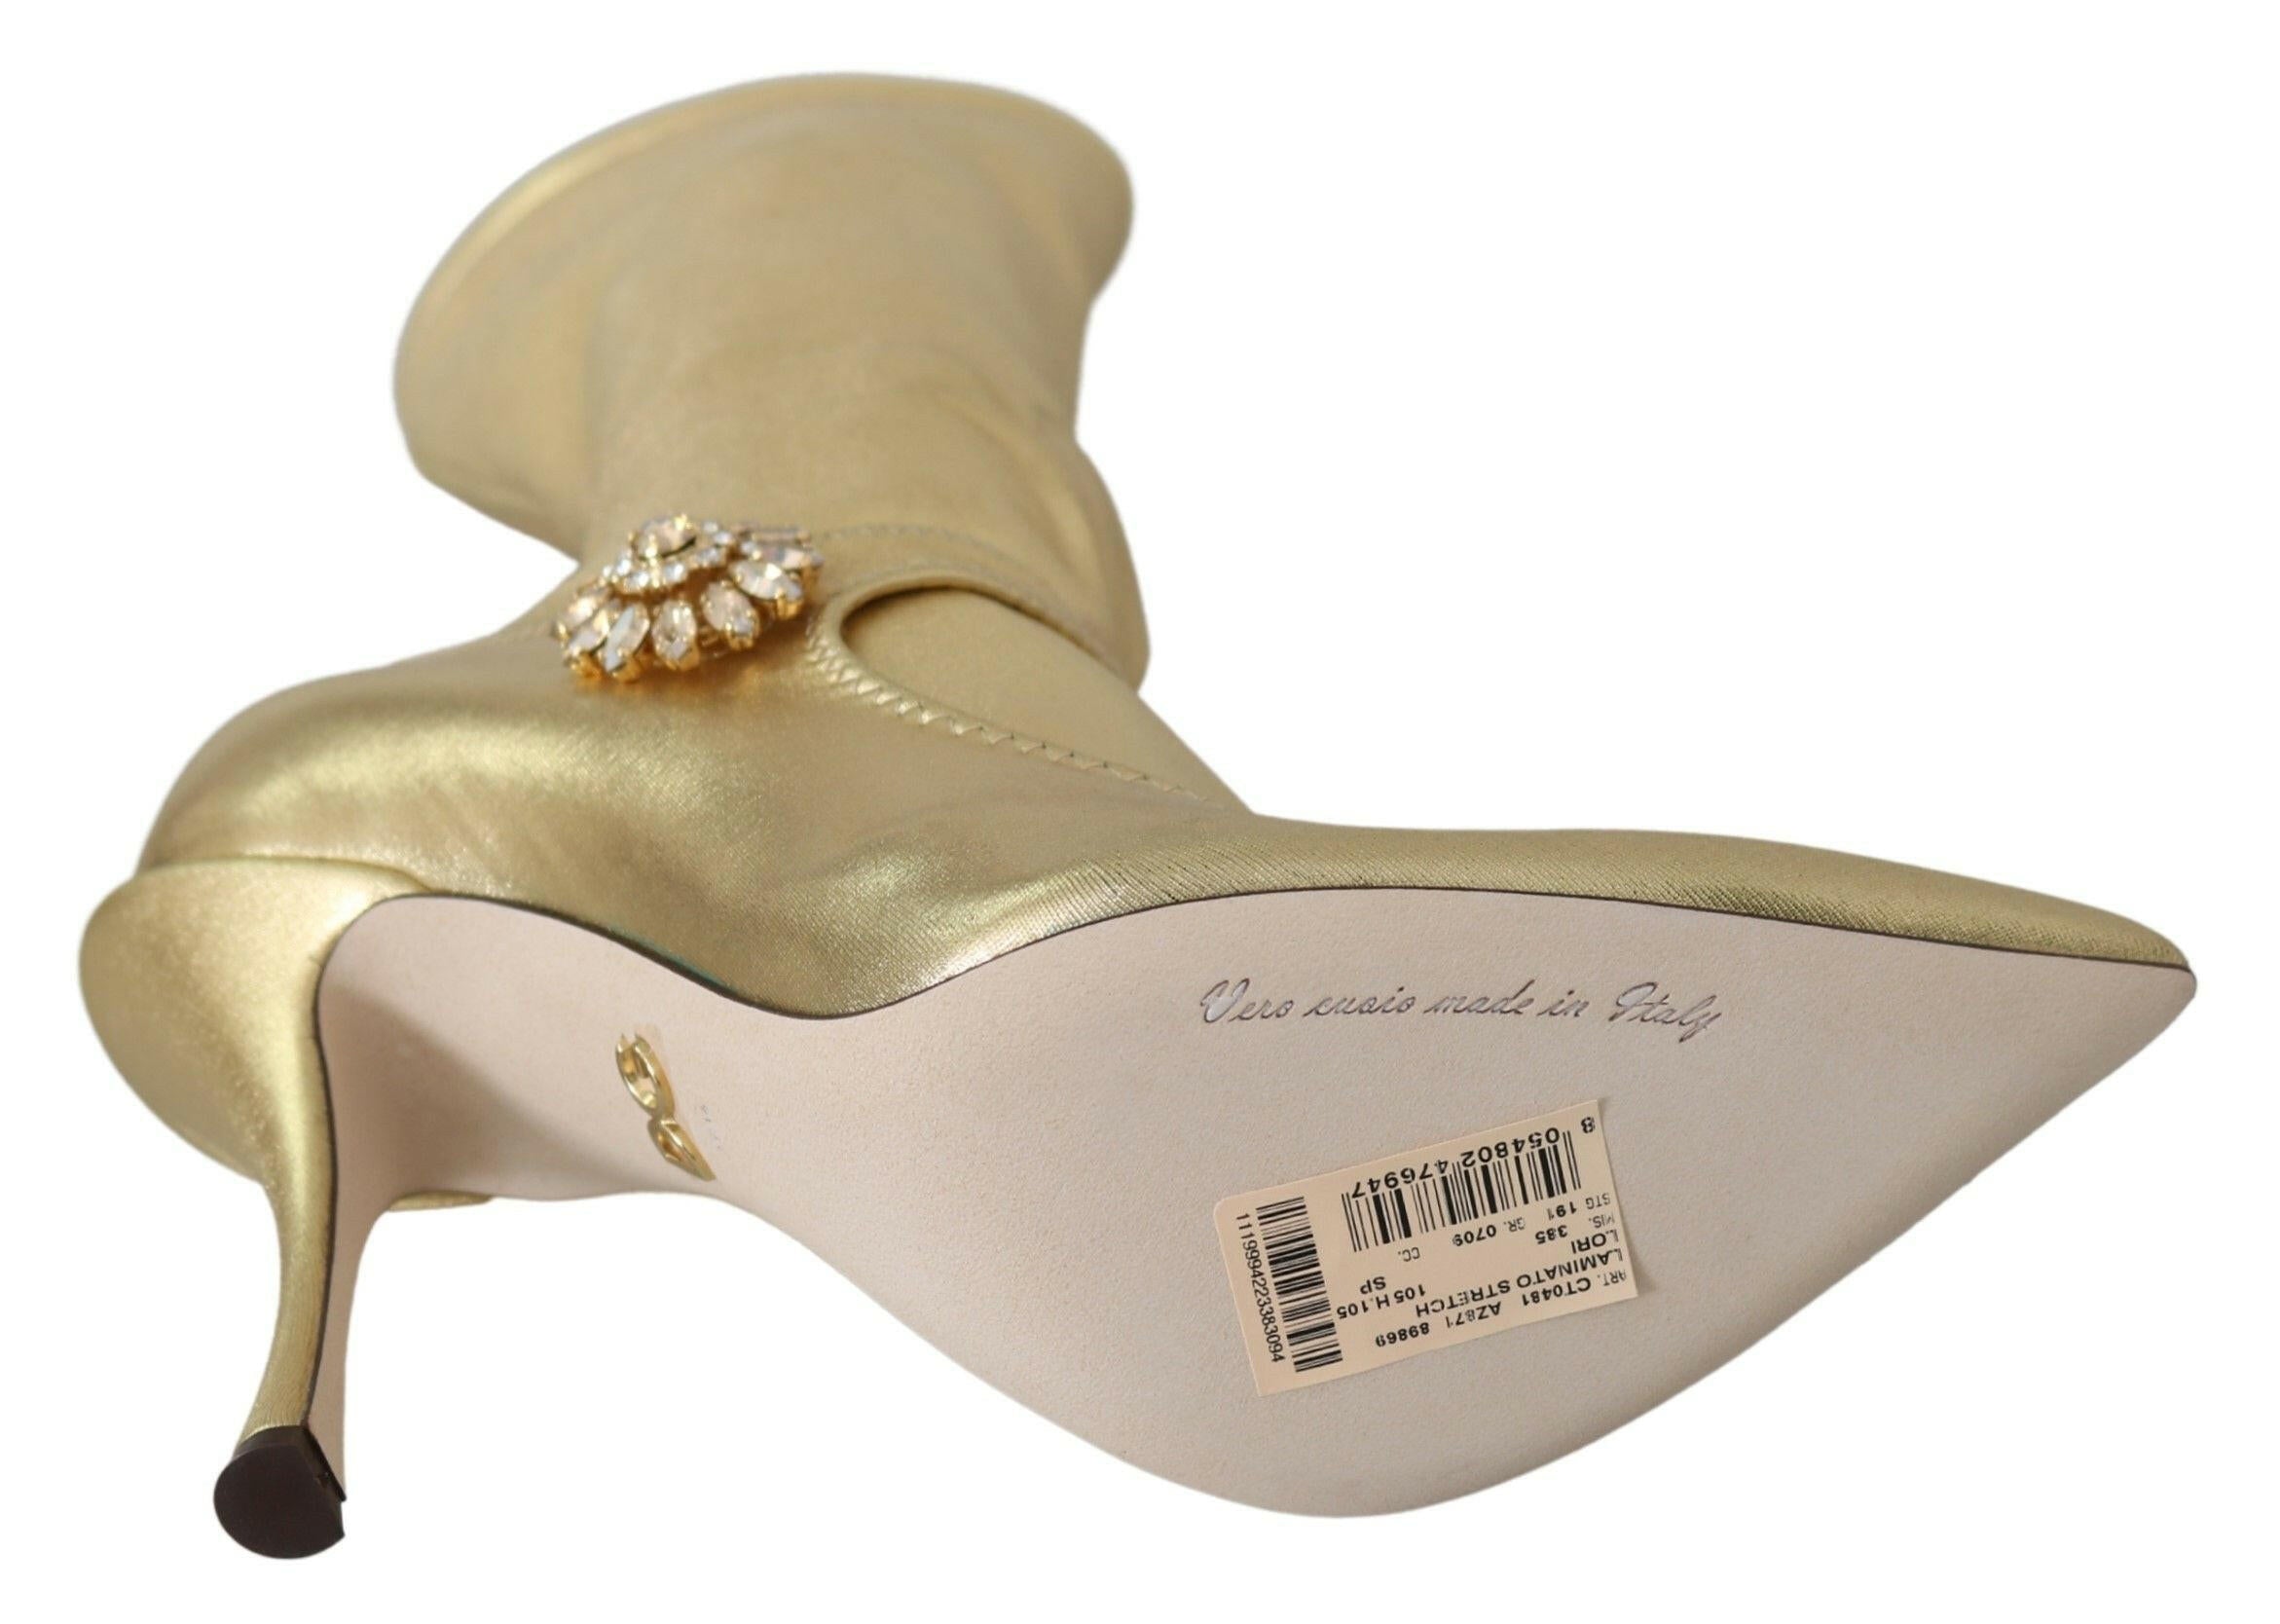 Dolce & Gabbana Gold Rhinestones Ankle Boots Socks Shoes - GENUINE AUTHENTIC BRAND LLC  